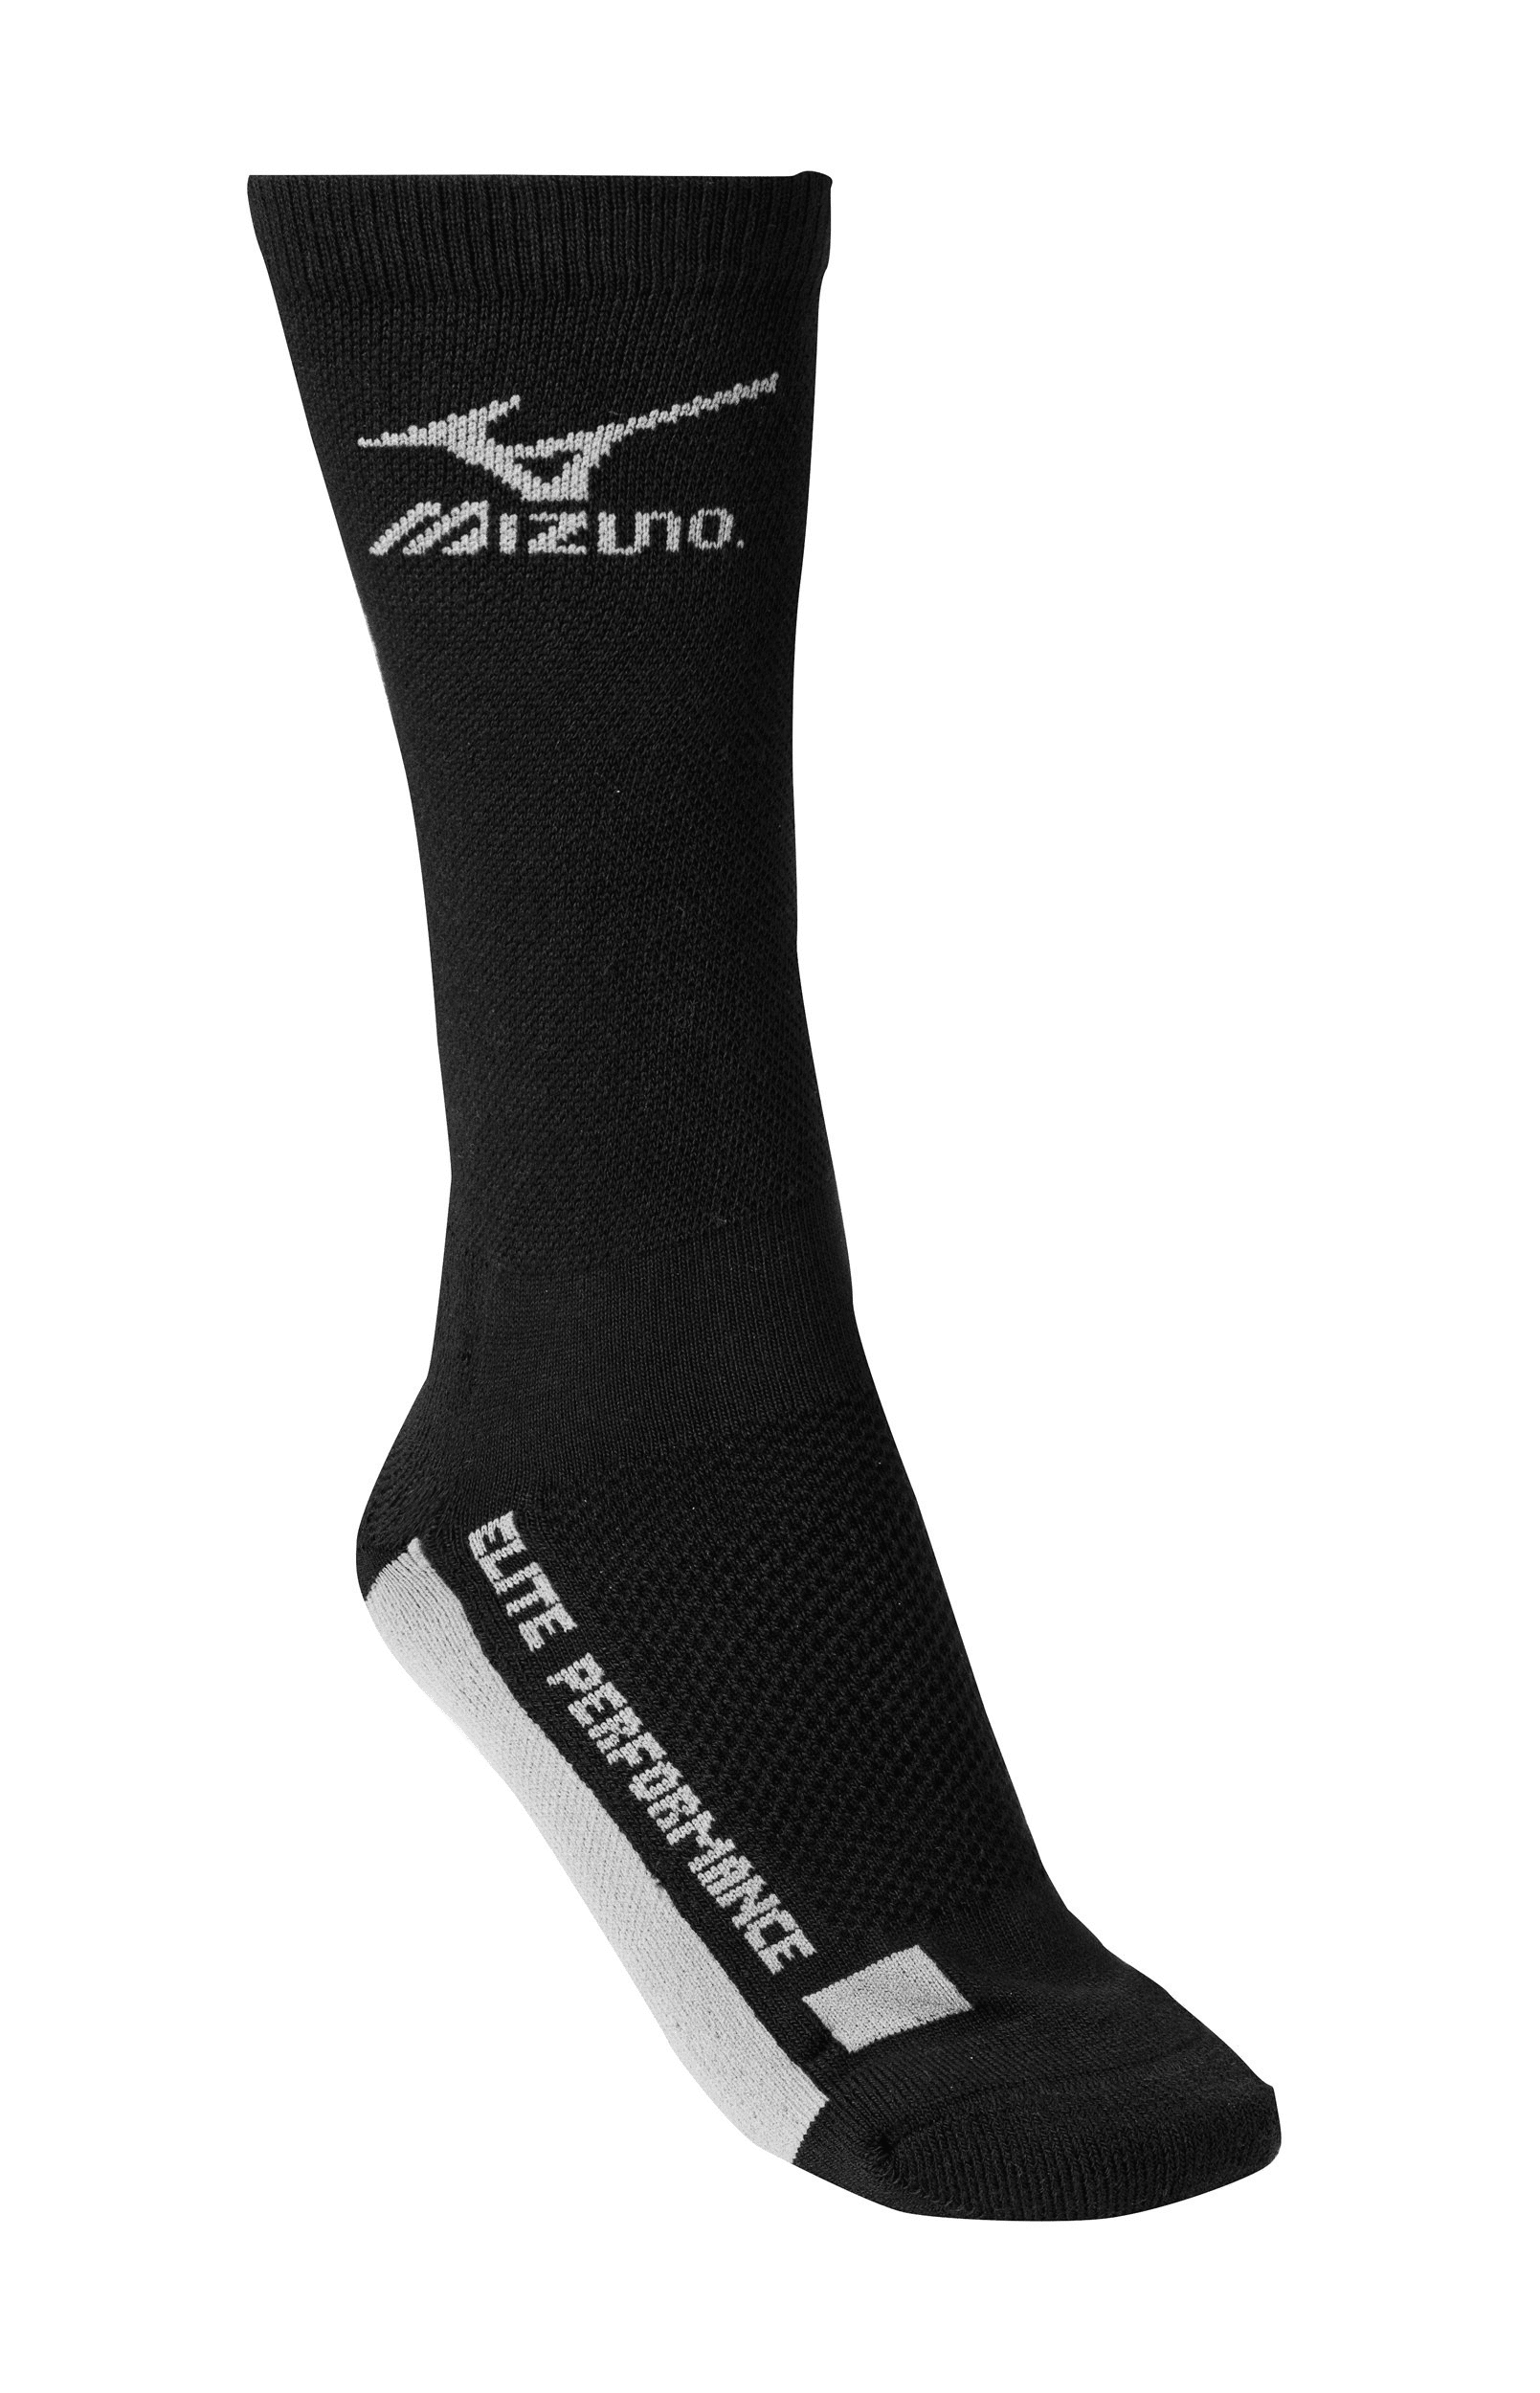 Mizuno Crew Sock, Size Small, Black-Grey (9091) - Walmart.com